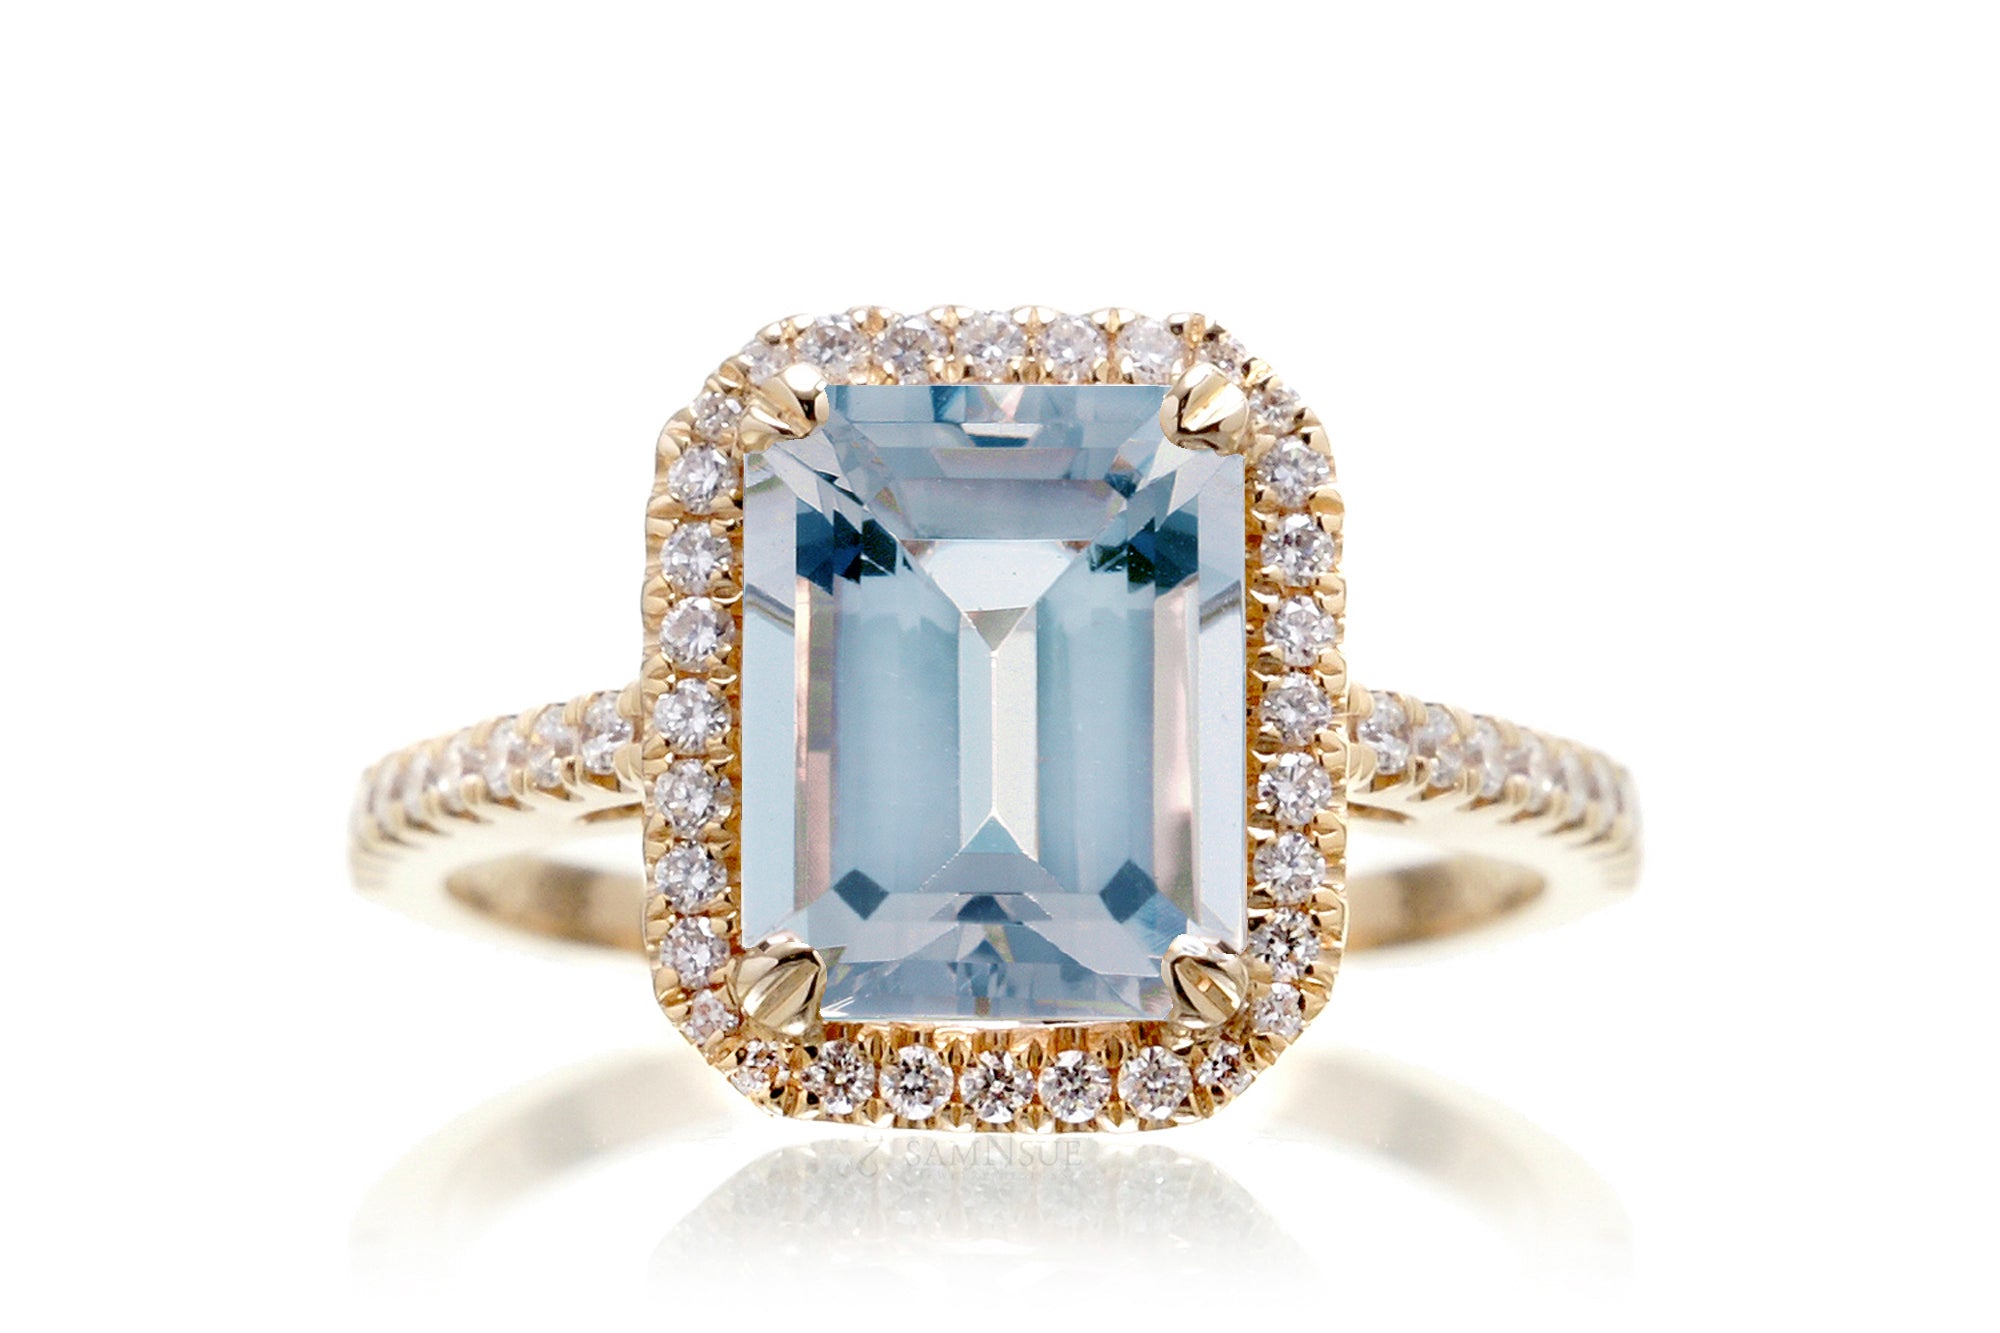 The Signature Emerald Cut Aquamarine Engagement Ring Diamond Halo – samNsue